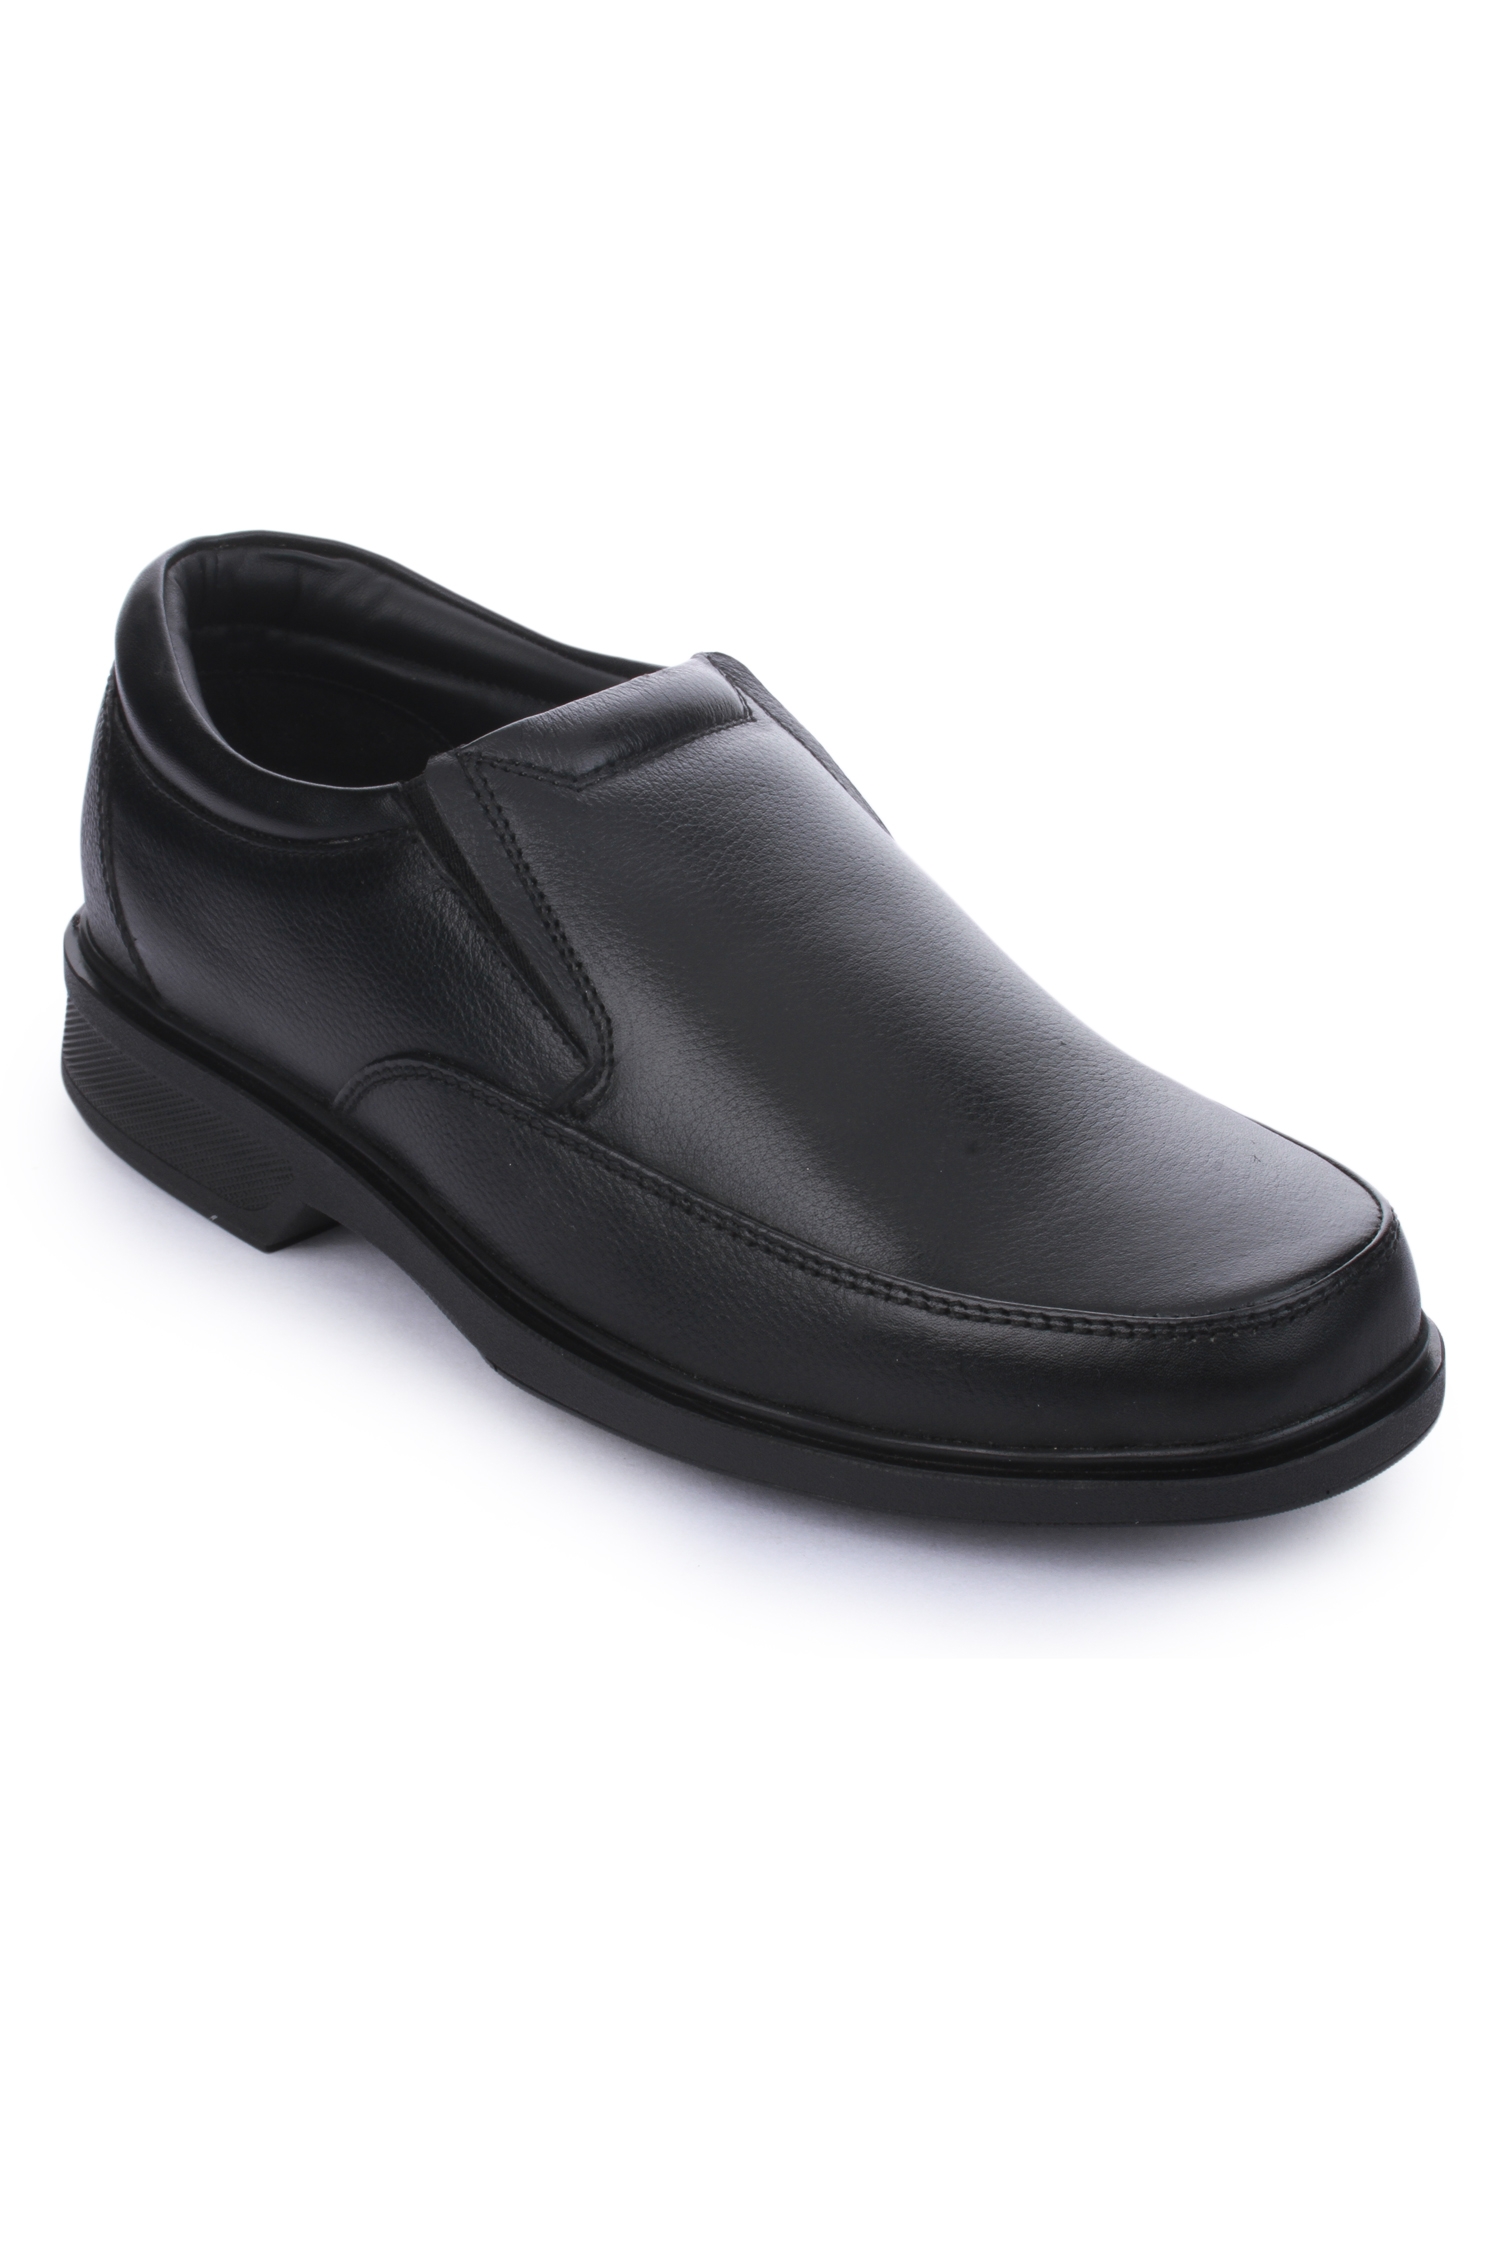 Liberty Healers Fl-1413 Mens Black Formal Shoes